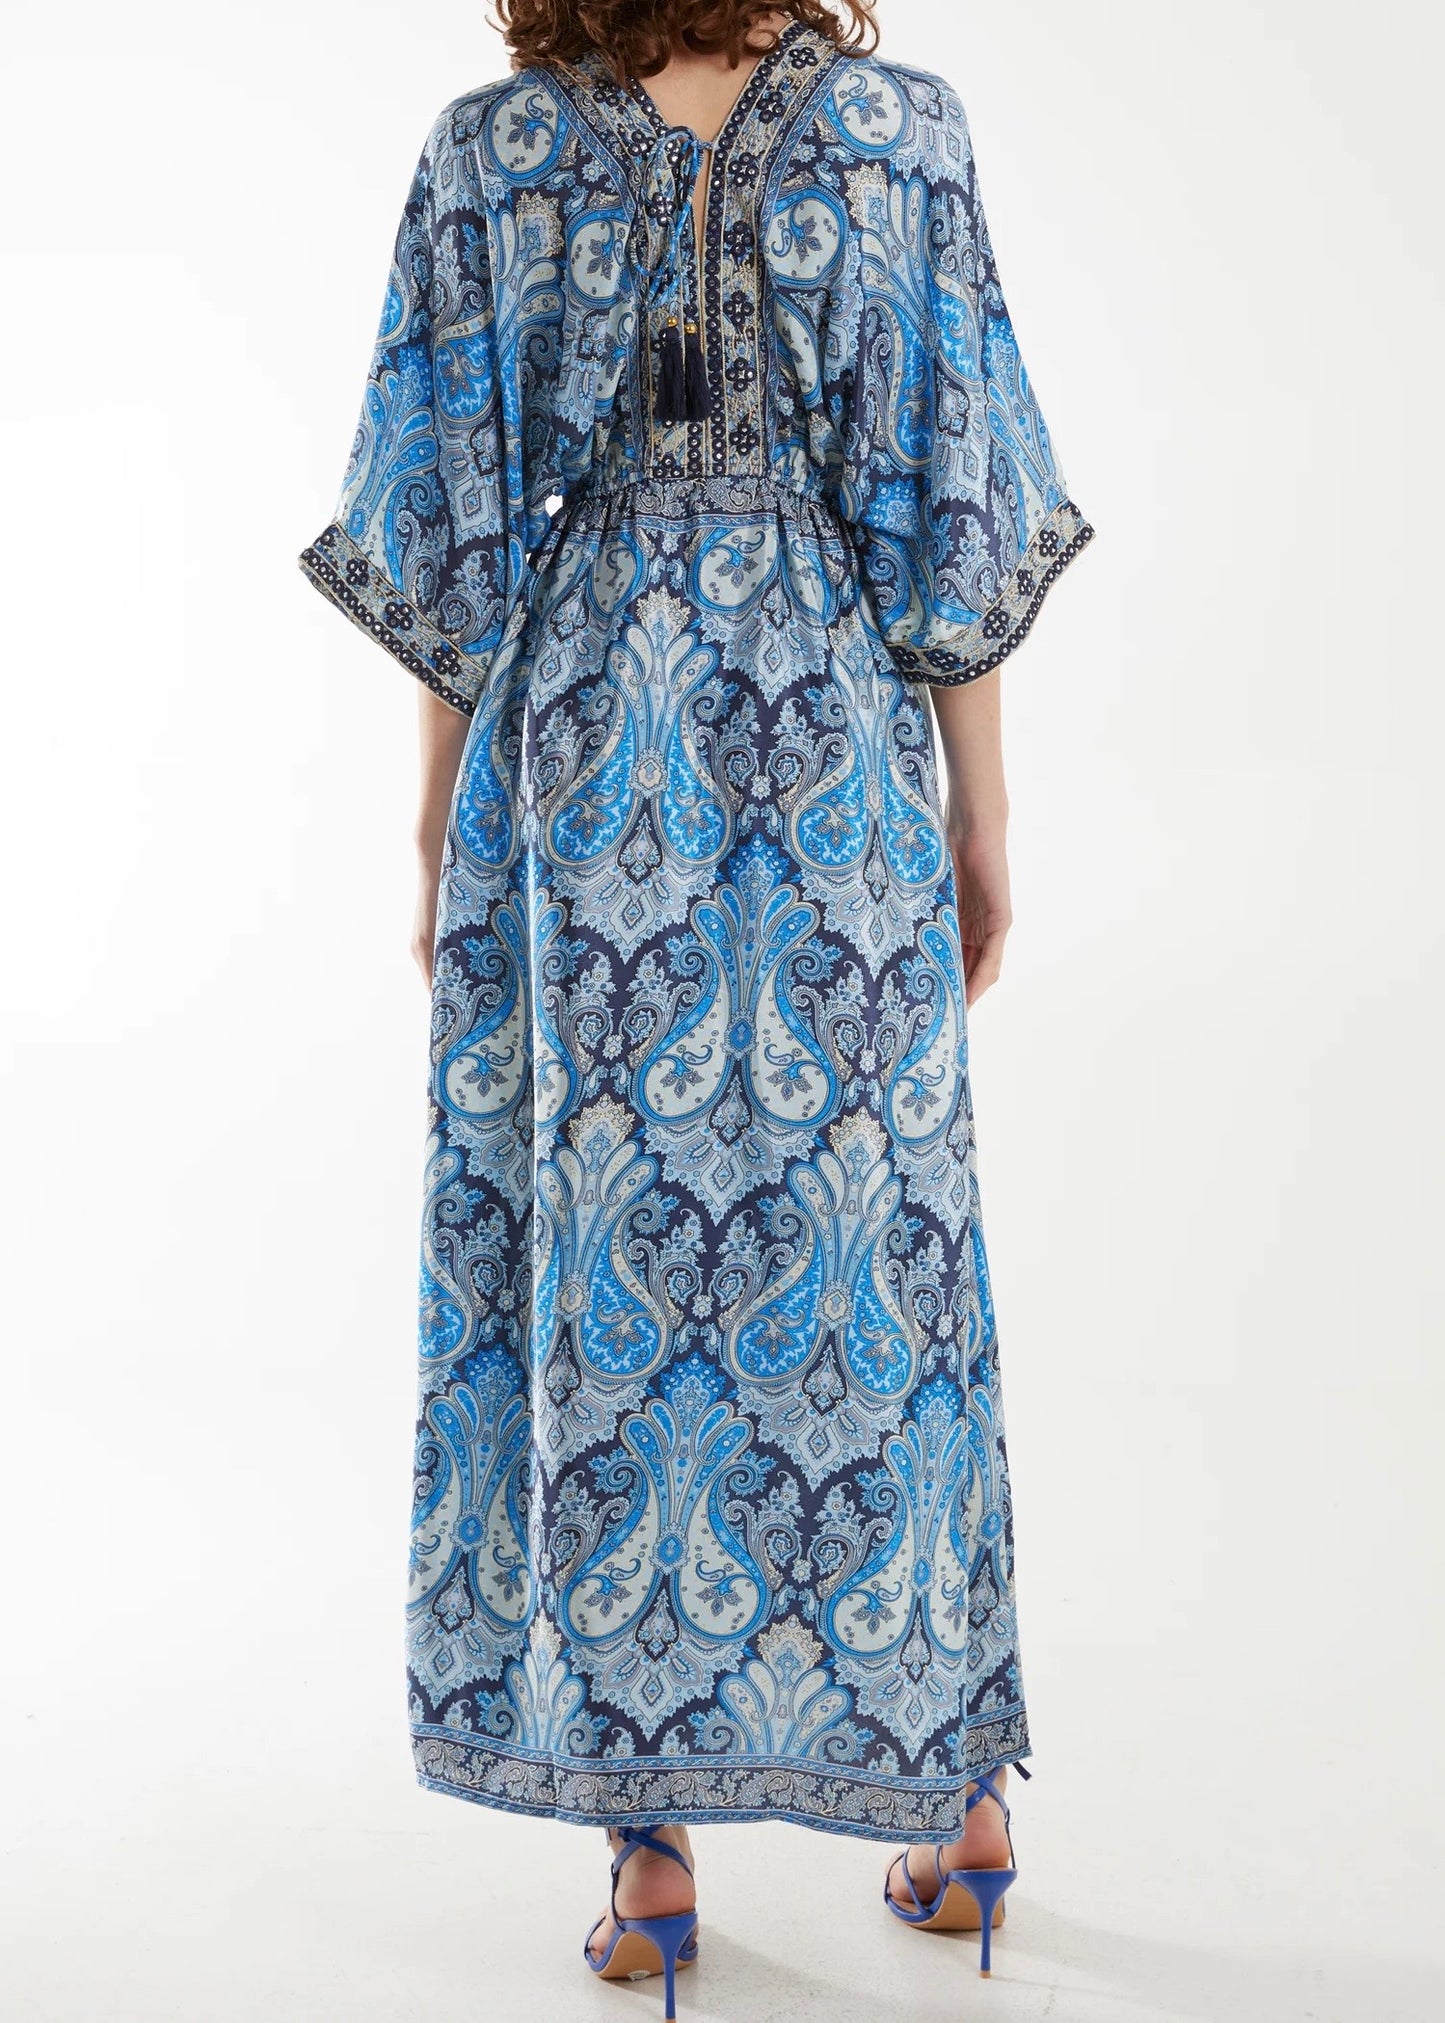 Sands - Embellished Paisley Silk Maxi Dress / Navy